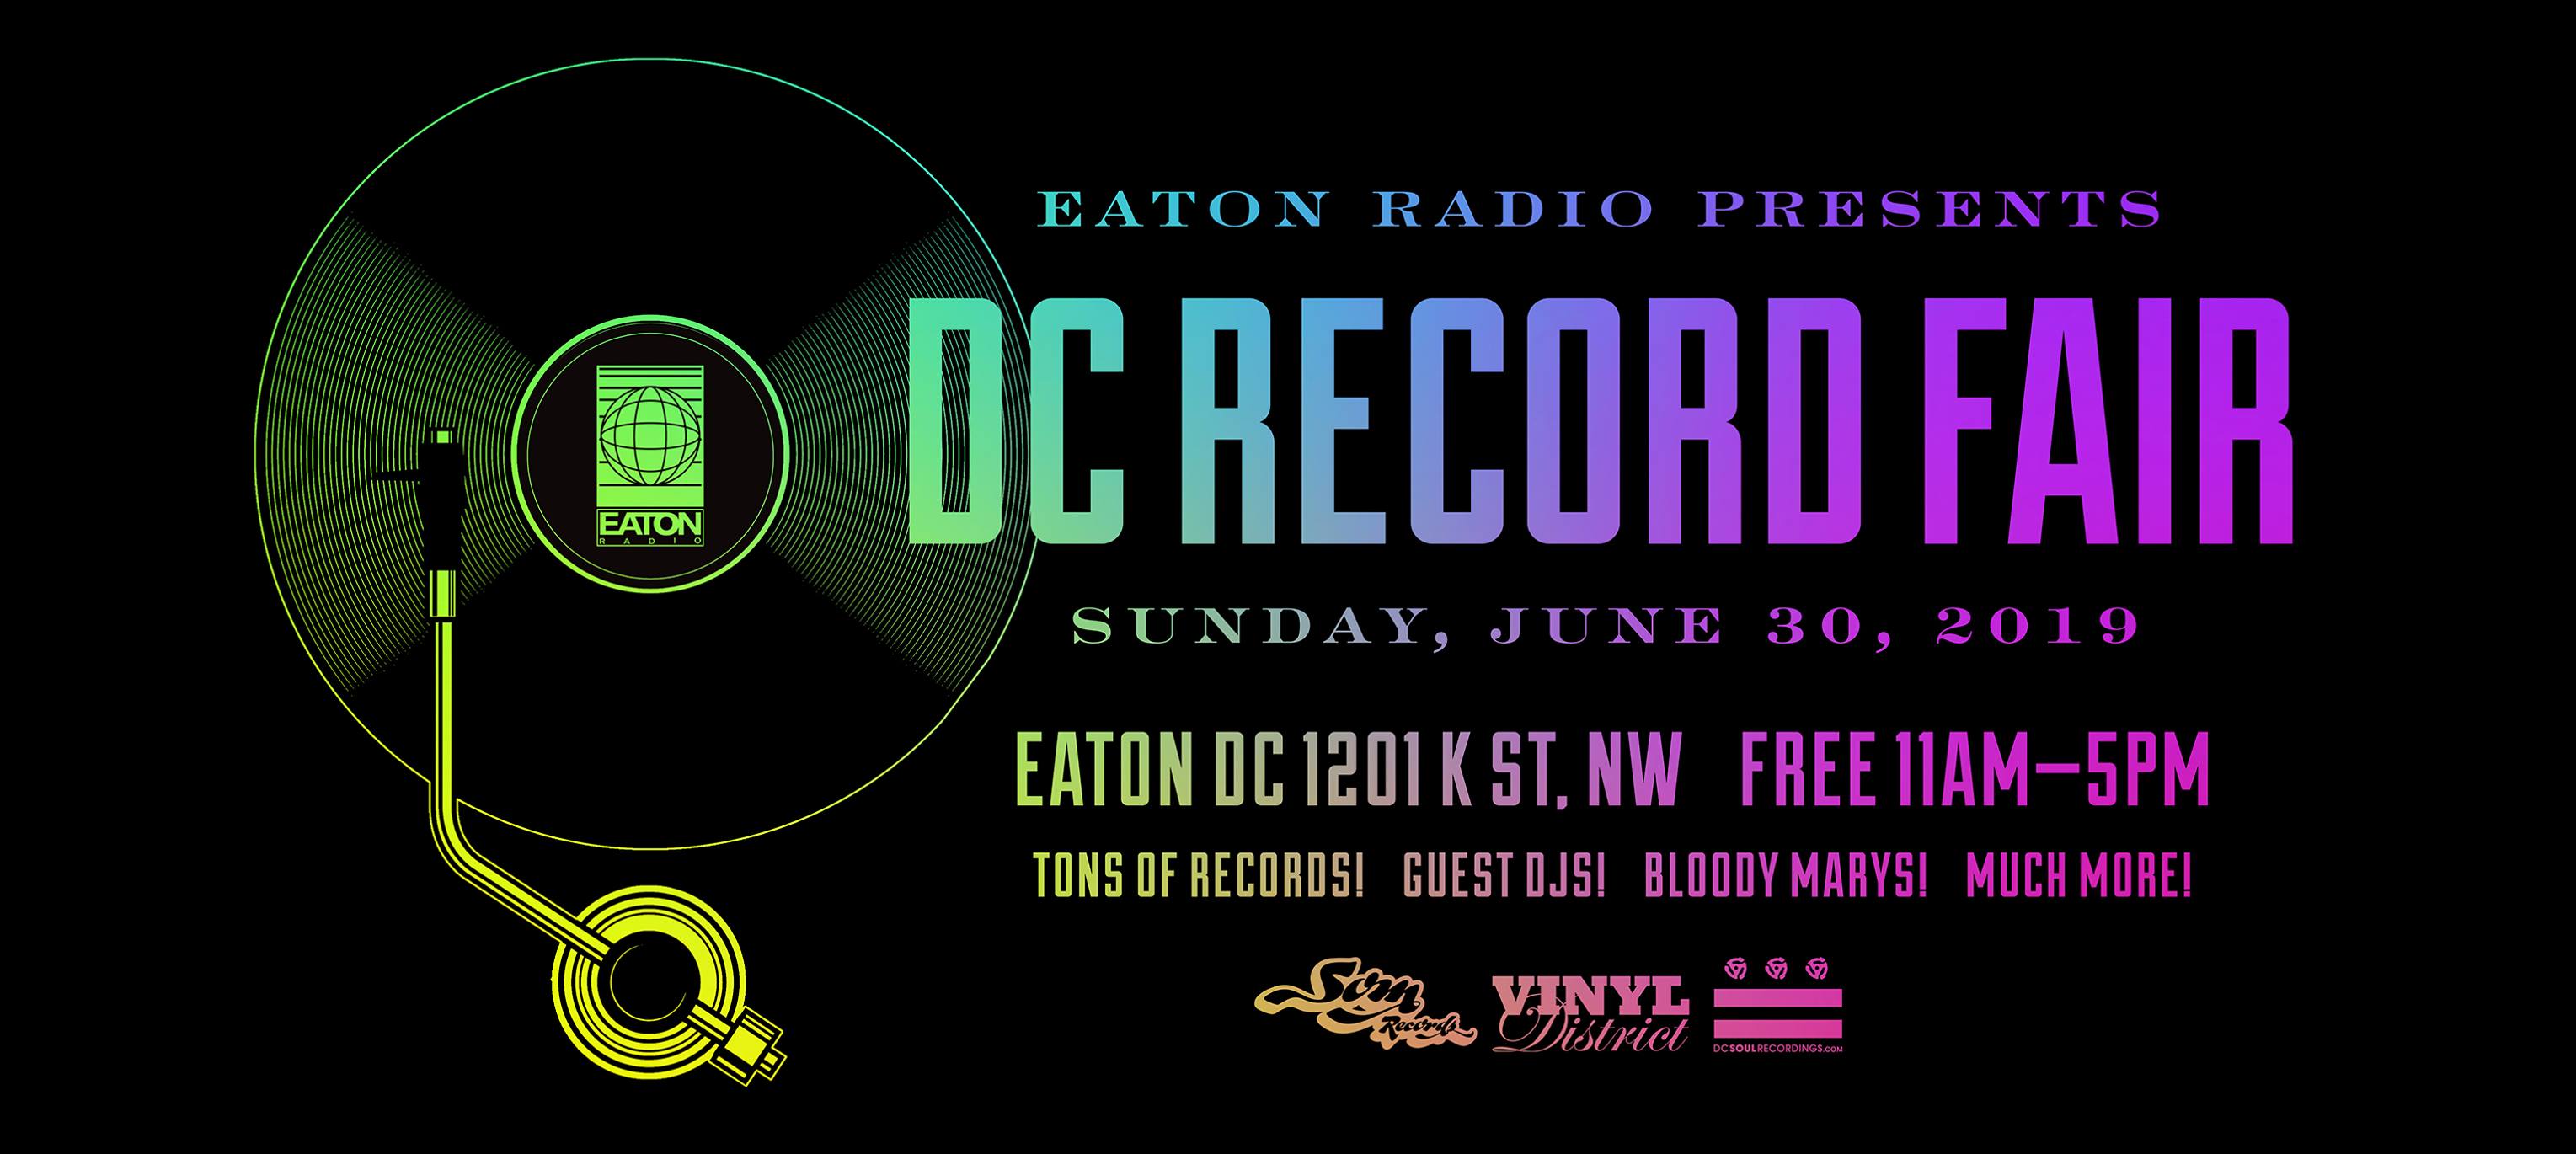 The DC Record Fair at Eaton DC